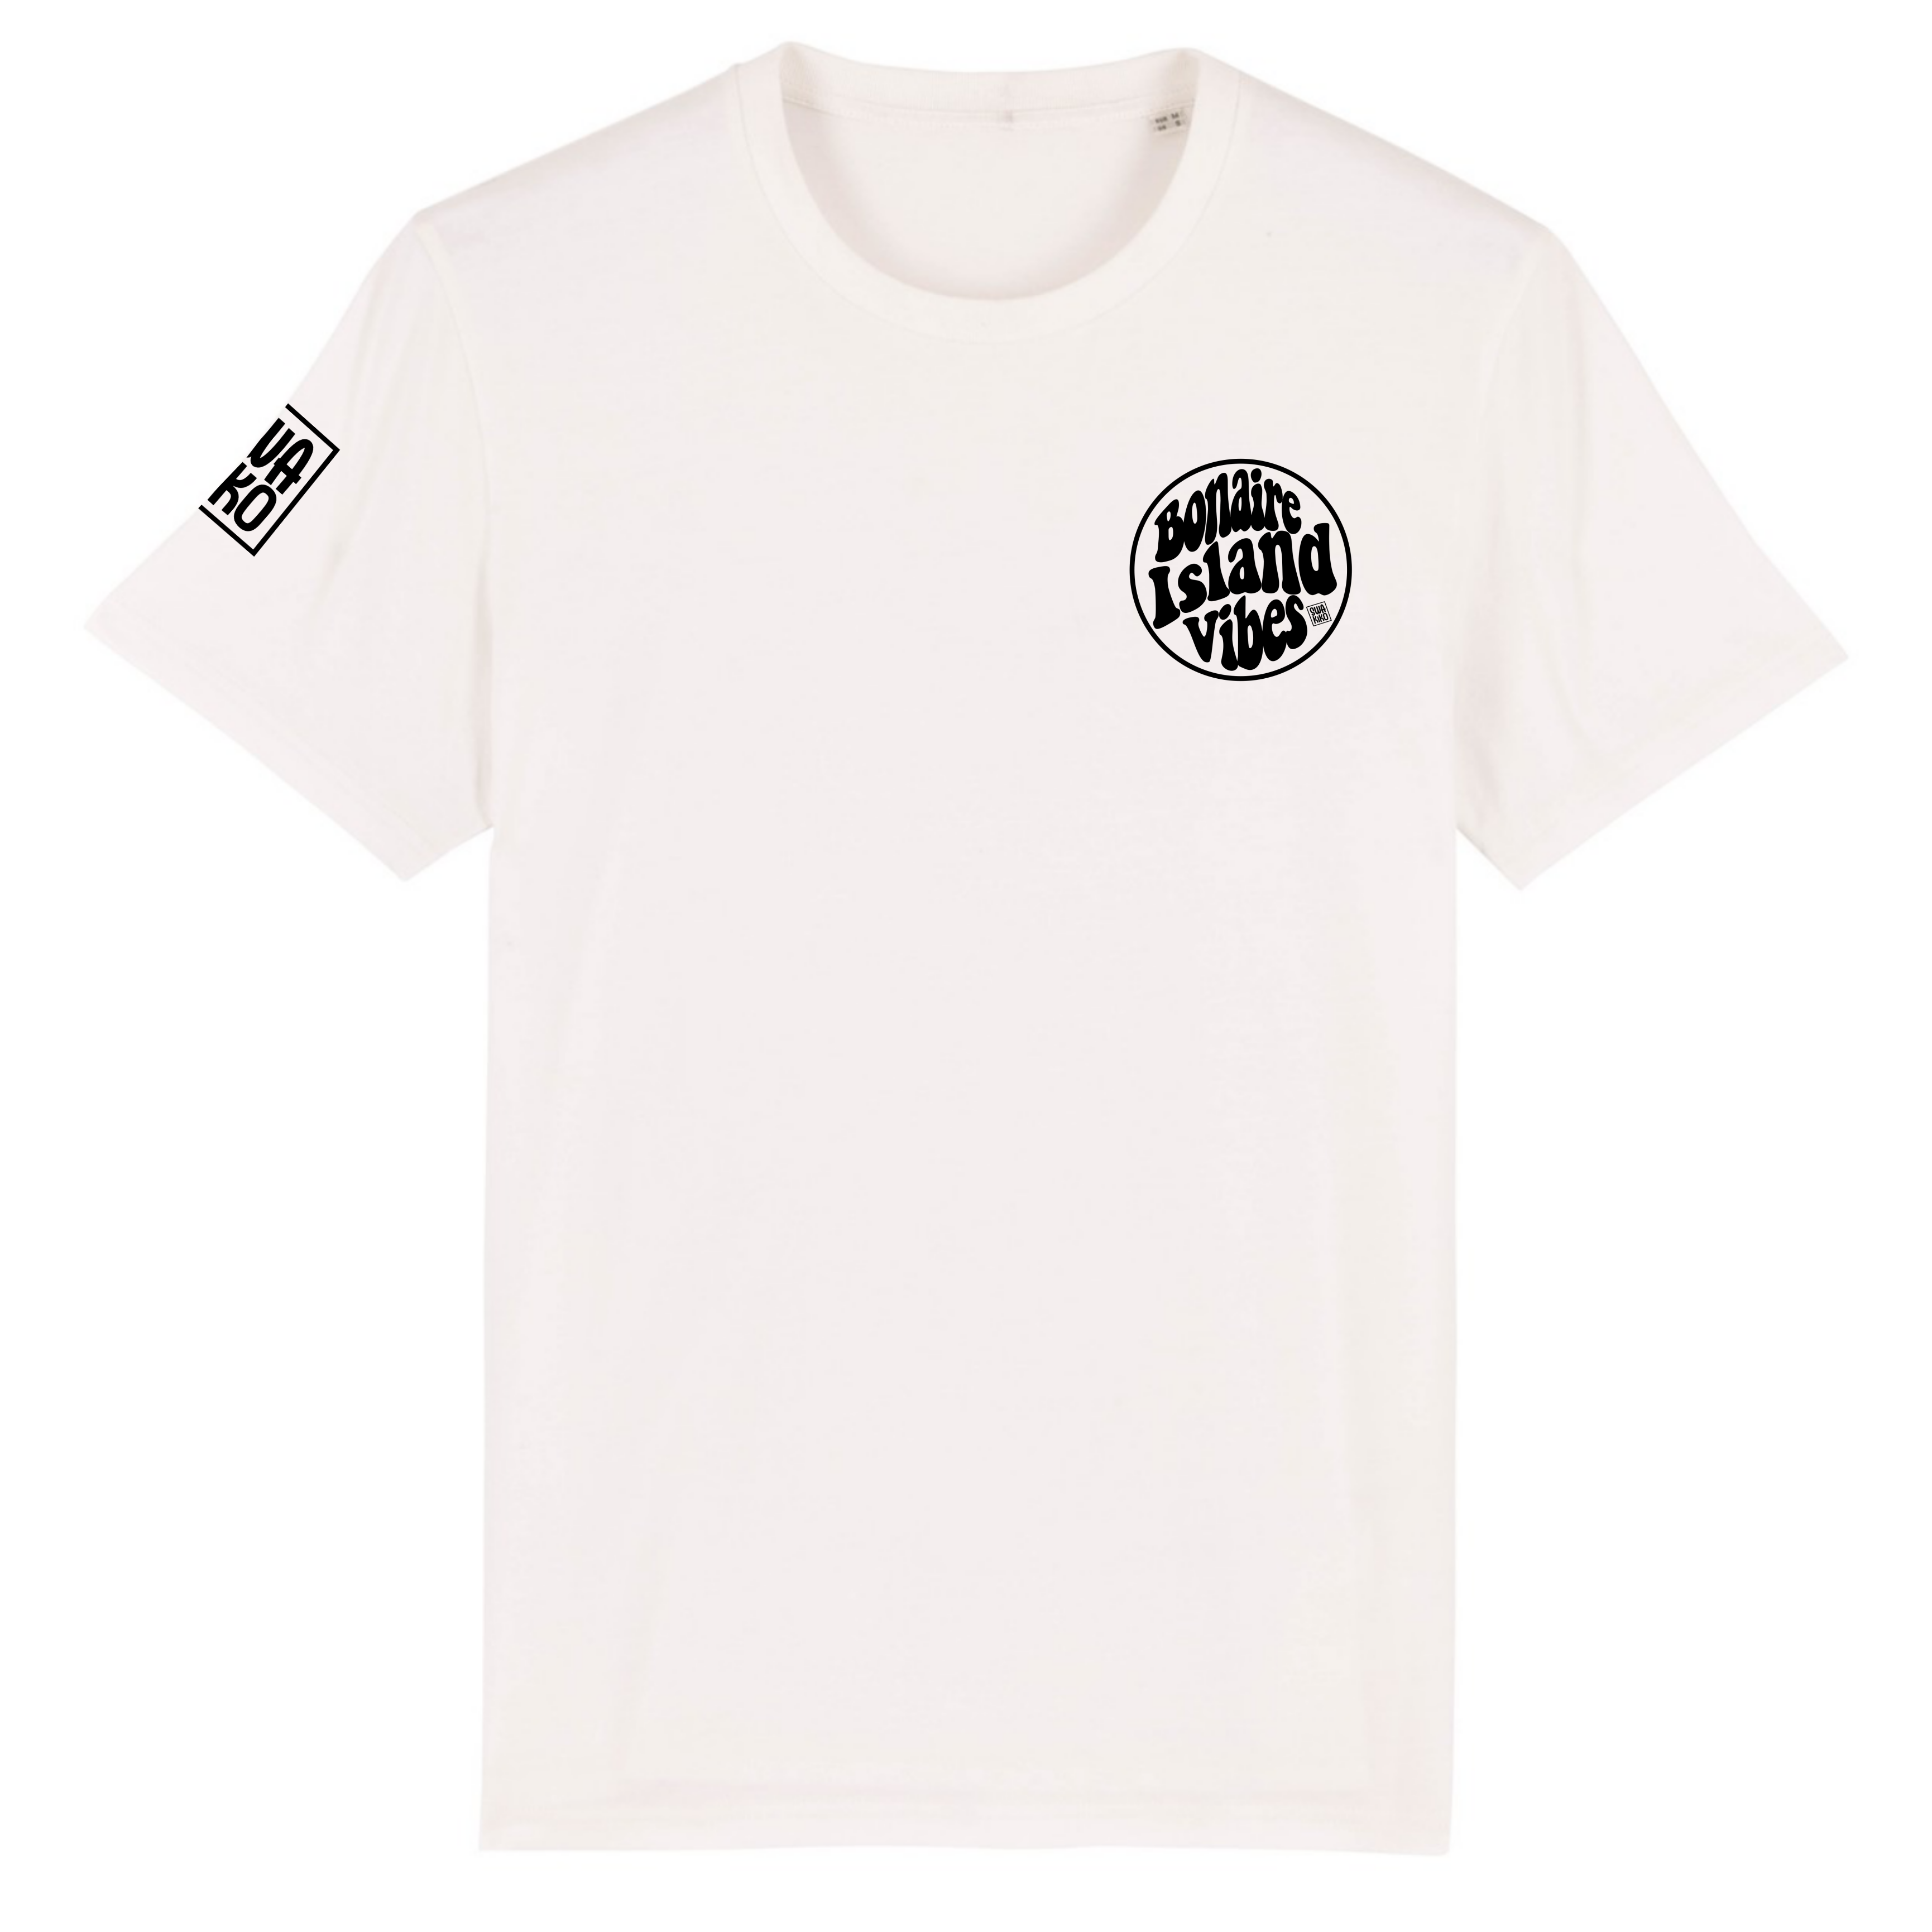 logo Bonaire Island Vibes, T-shirts, white